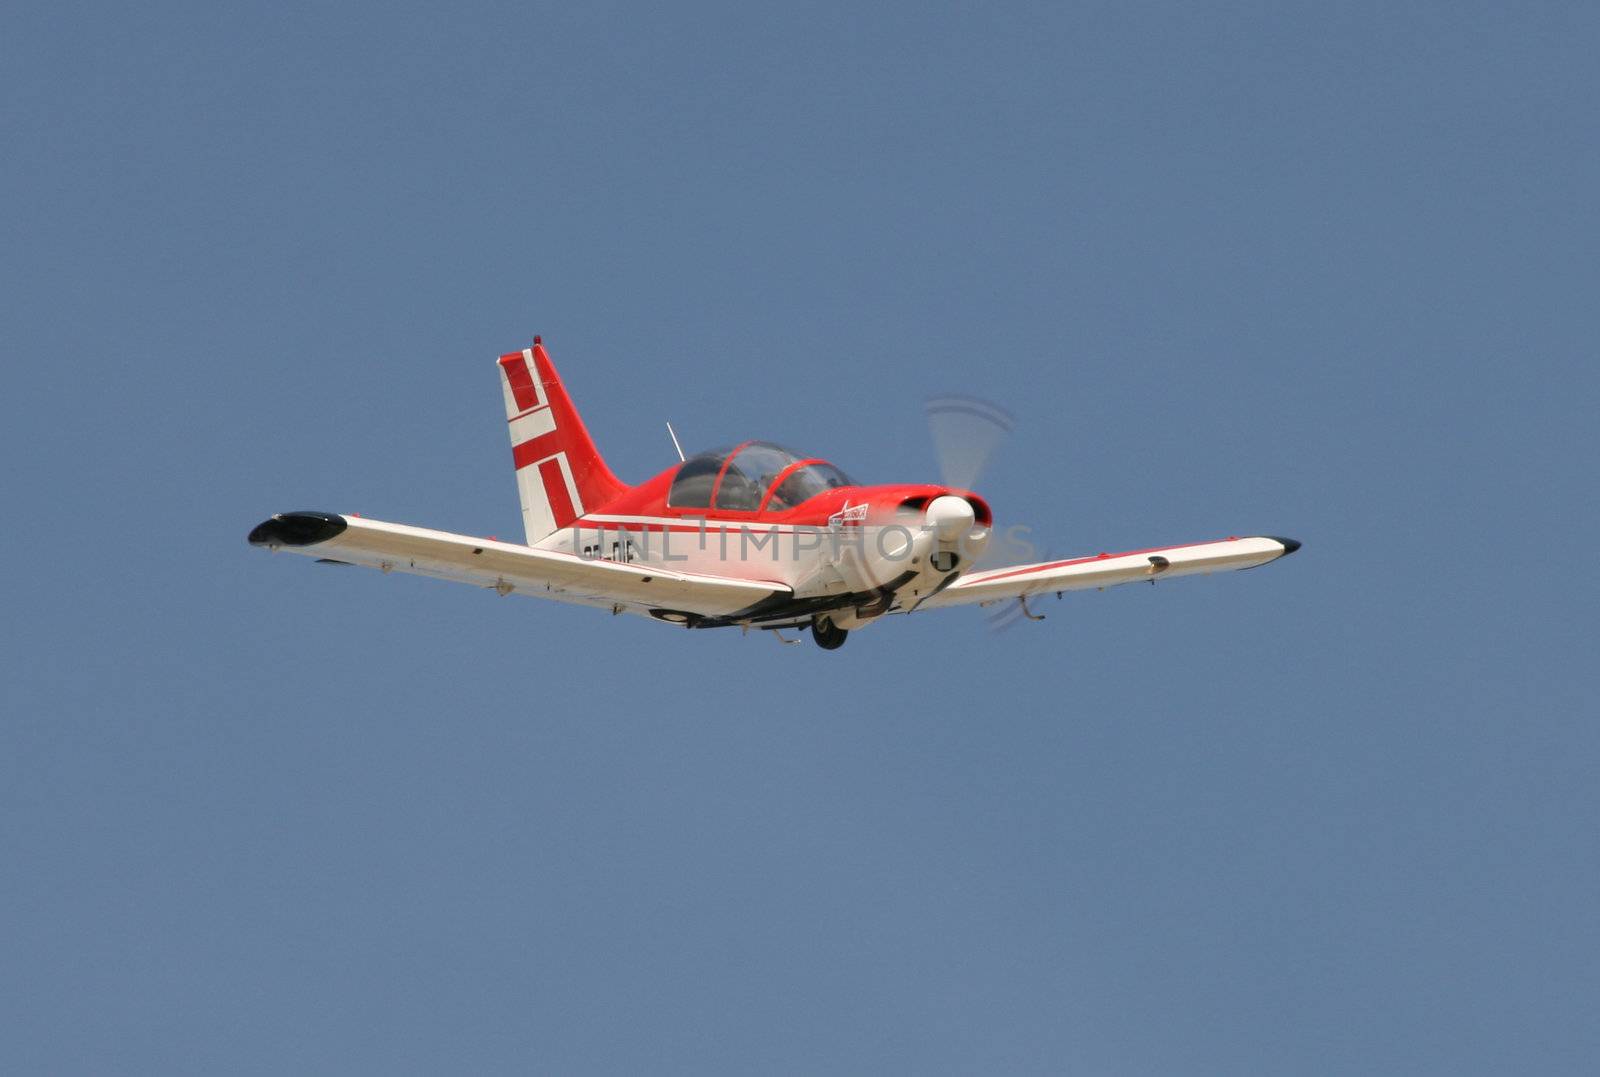 Single prop aircraft - mid air photo. Aviation.